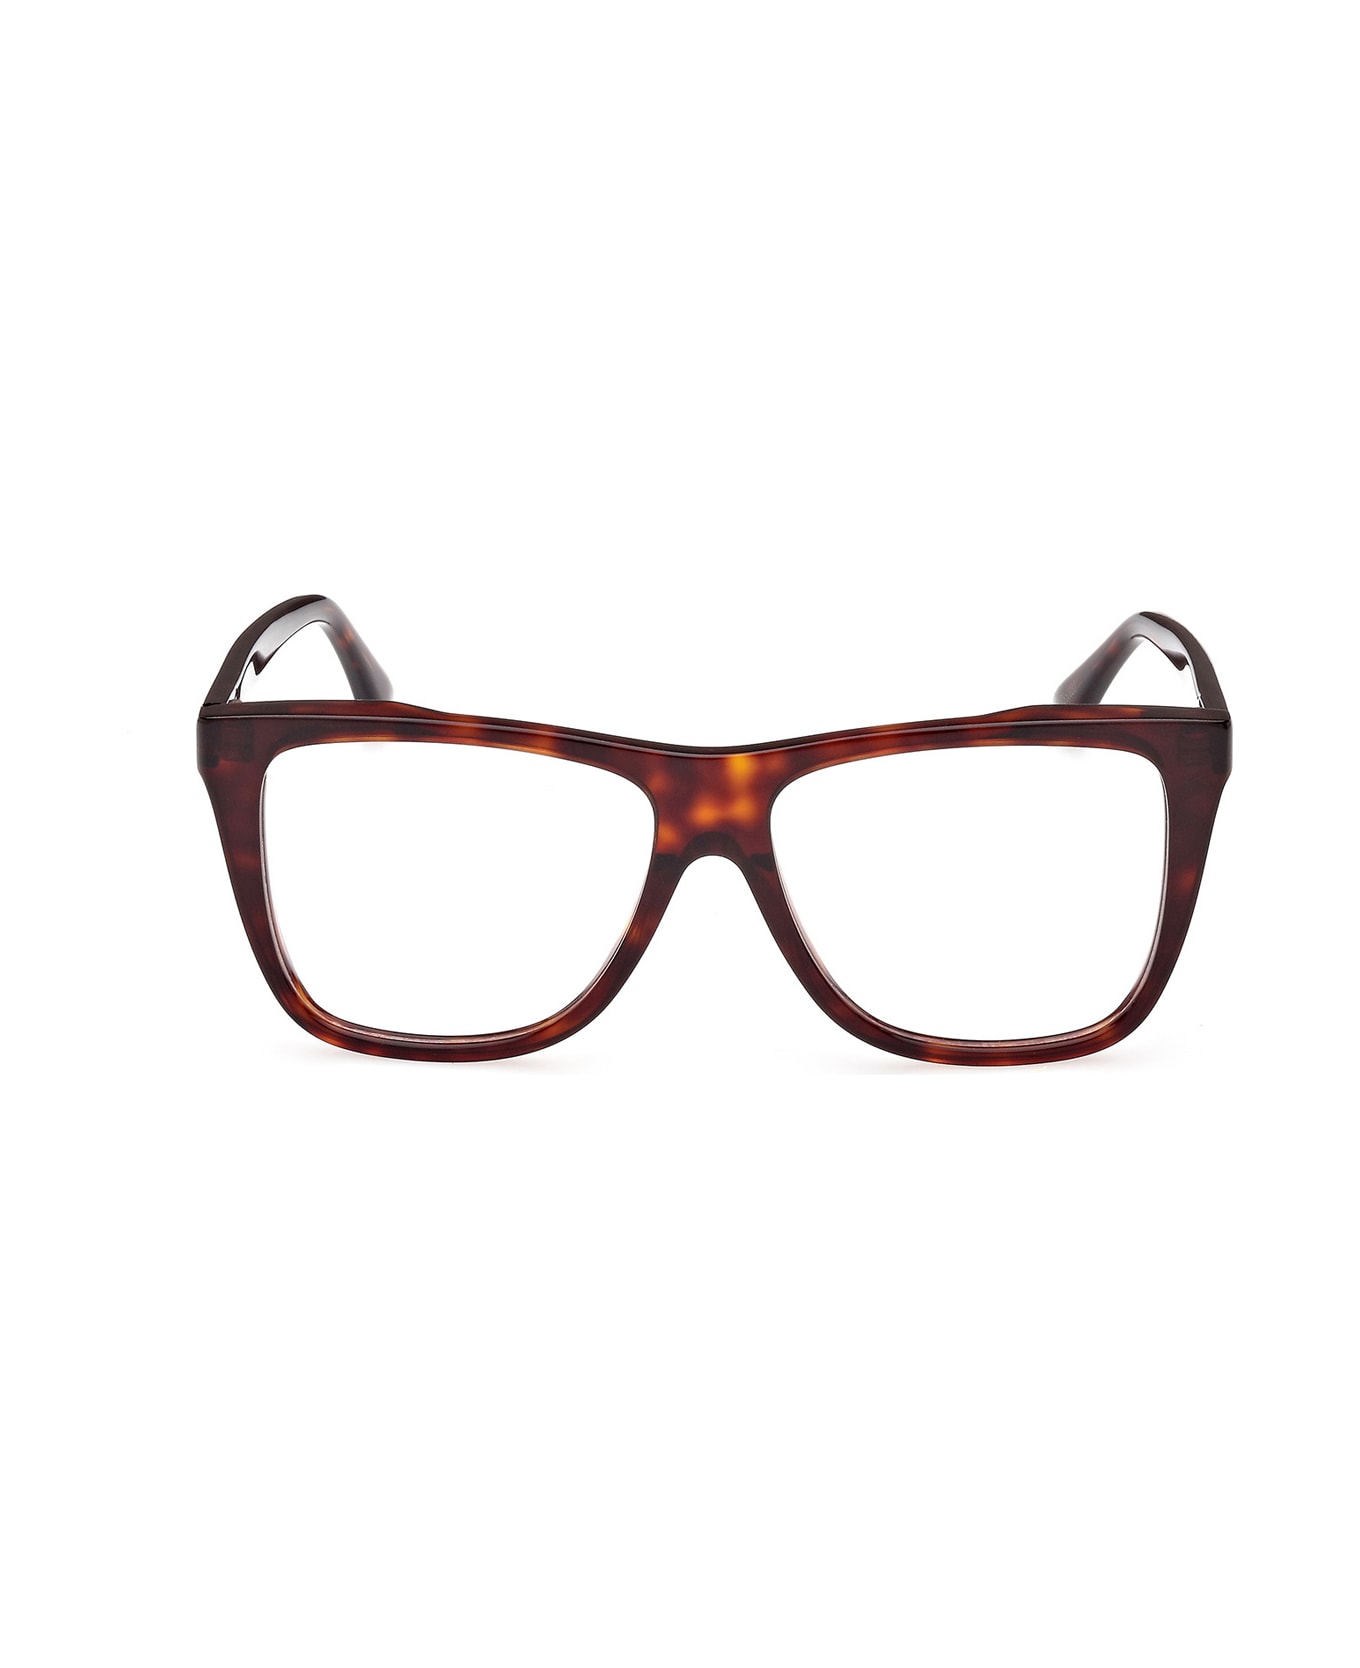 Max Mara Mm5096 054 Glasses - Marrone アイウェア